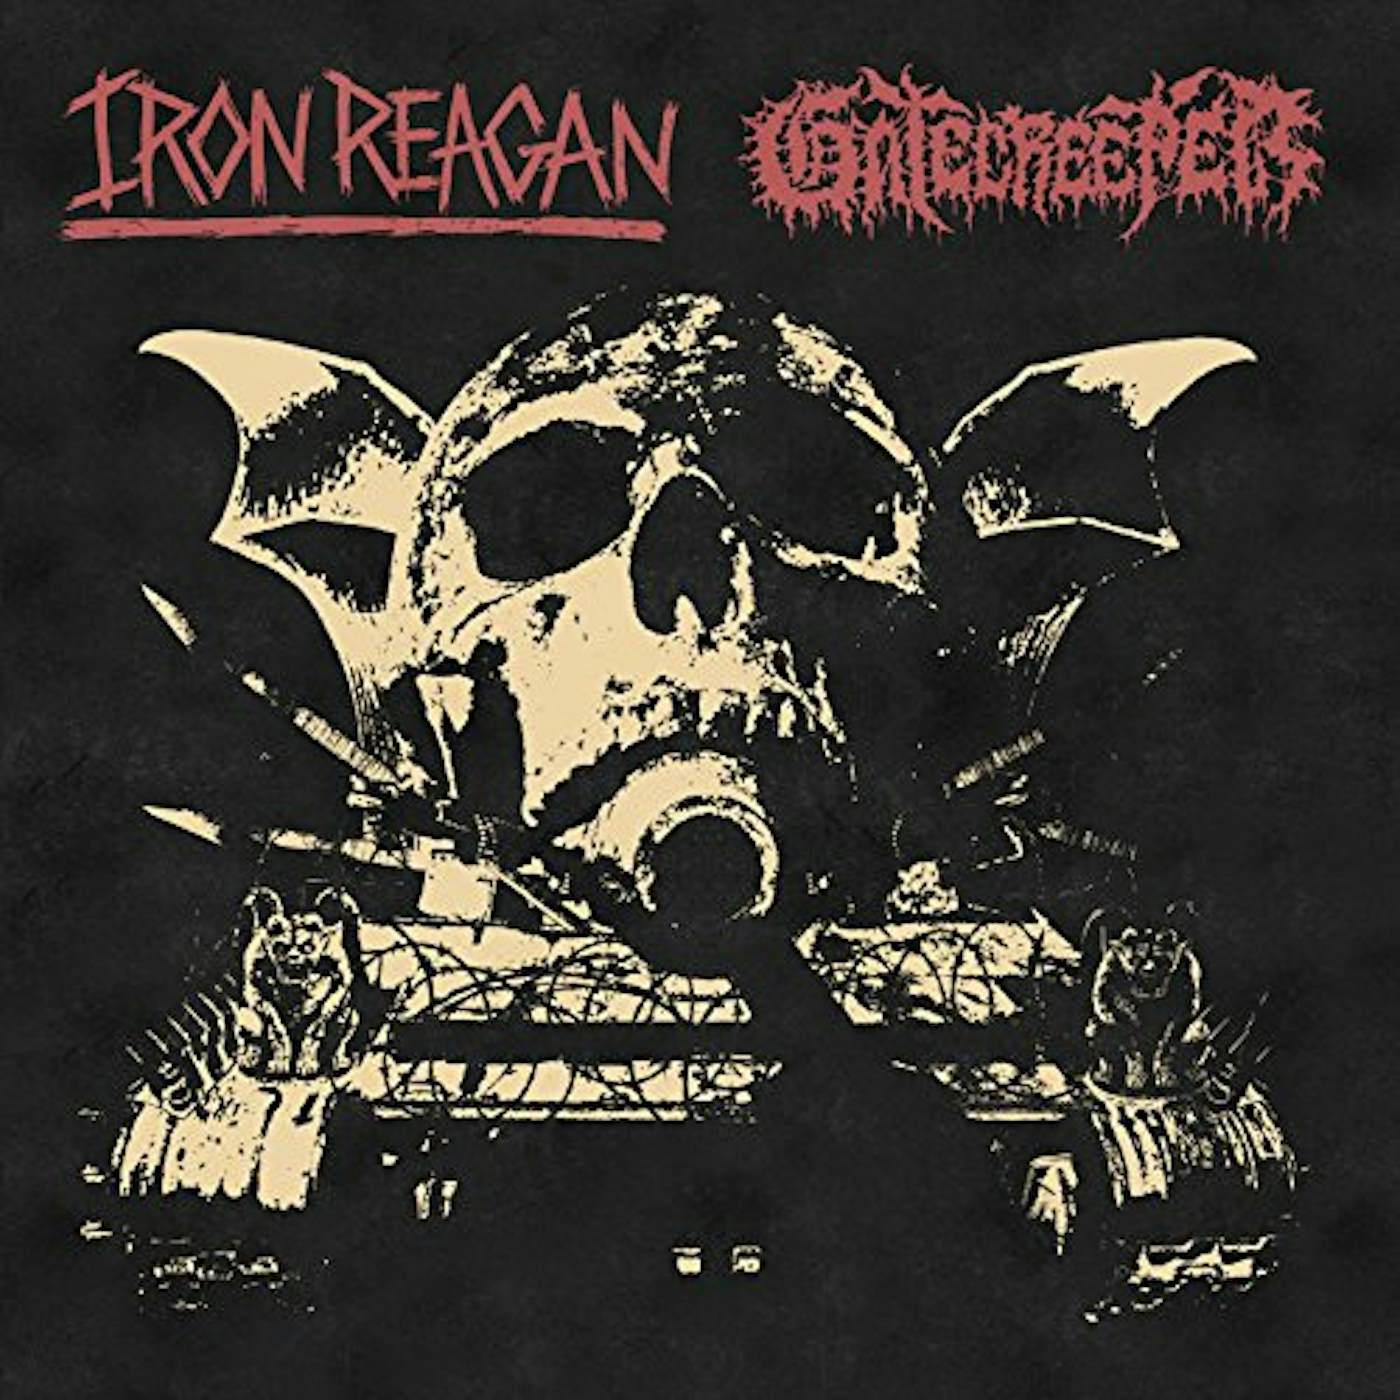 IRON REAGAN & GATECREEPER Vinyl Record